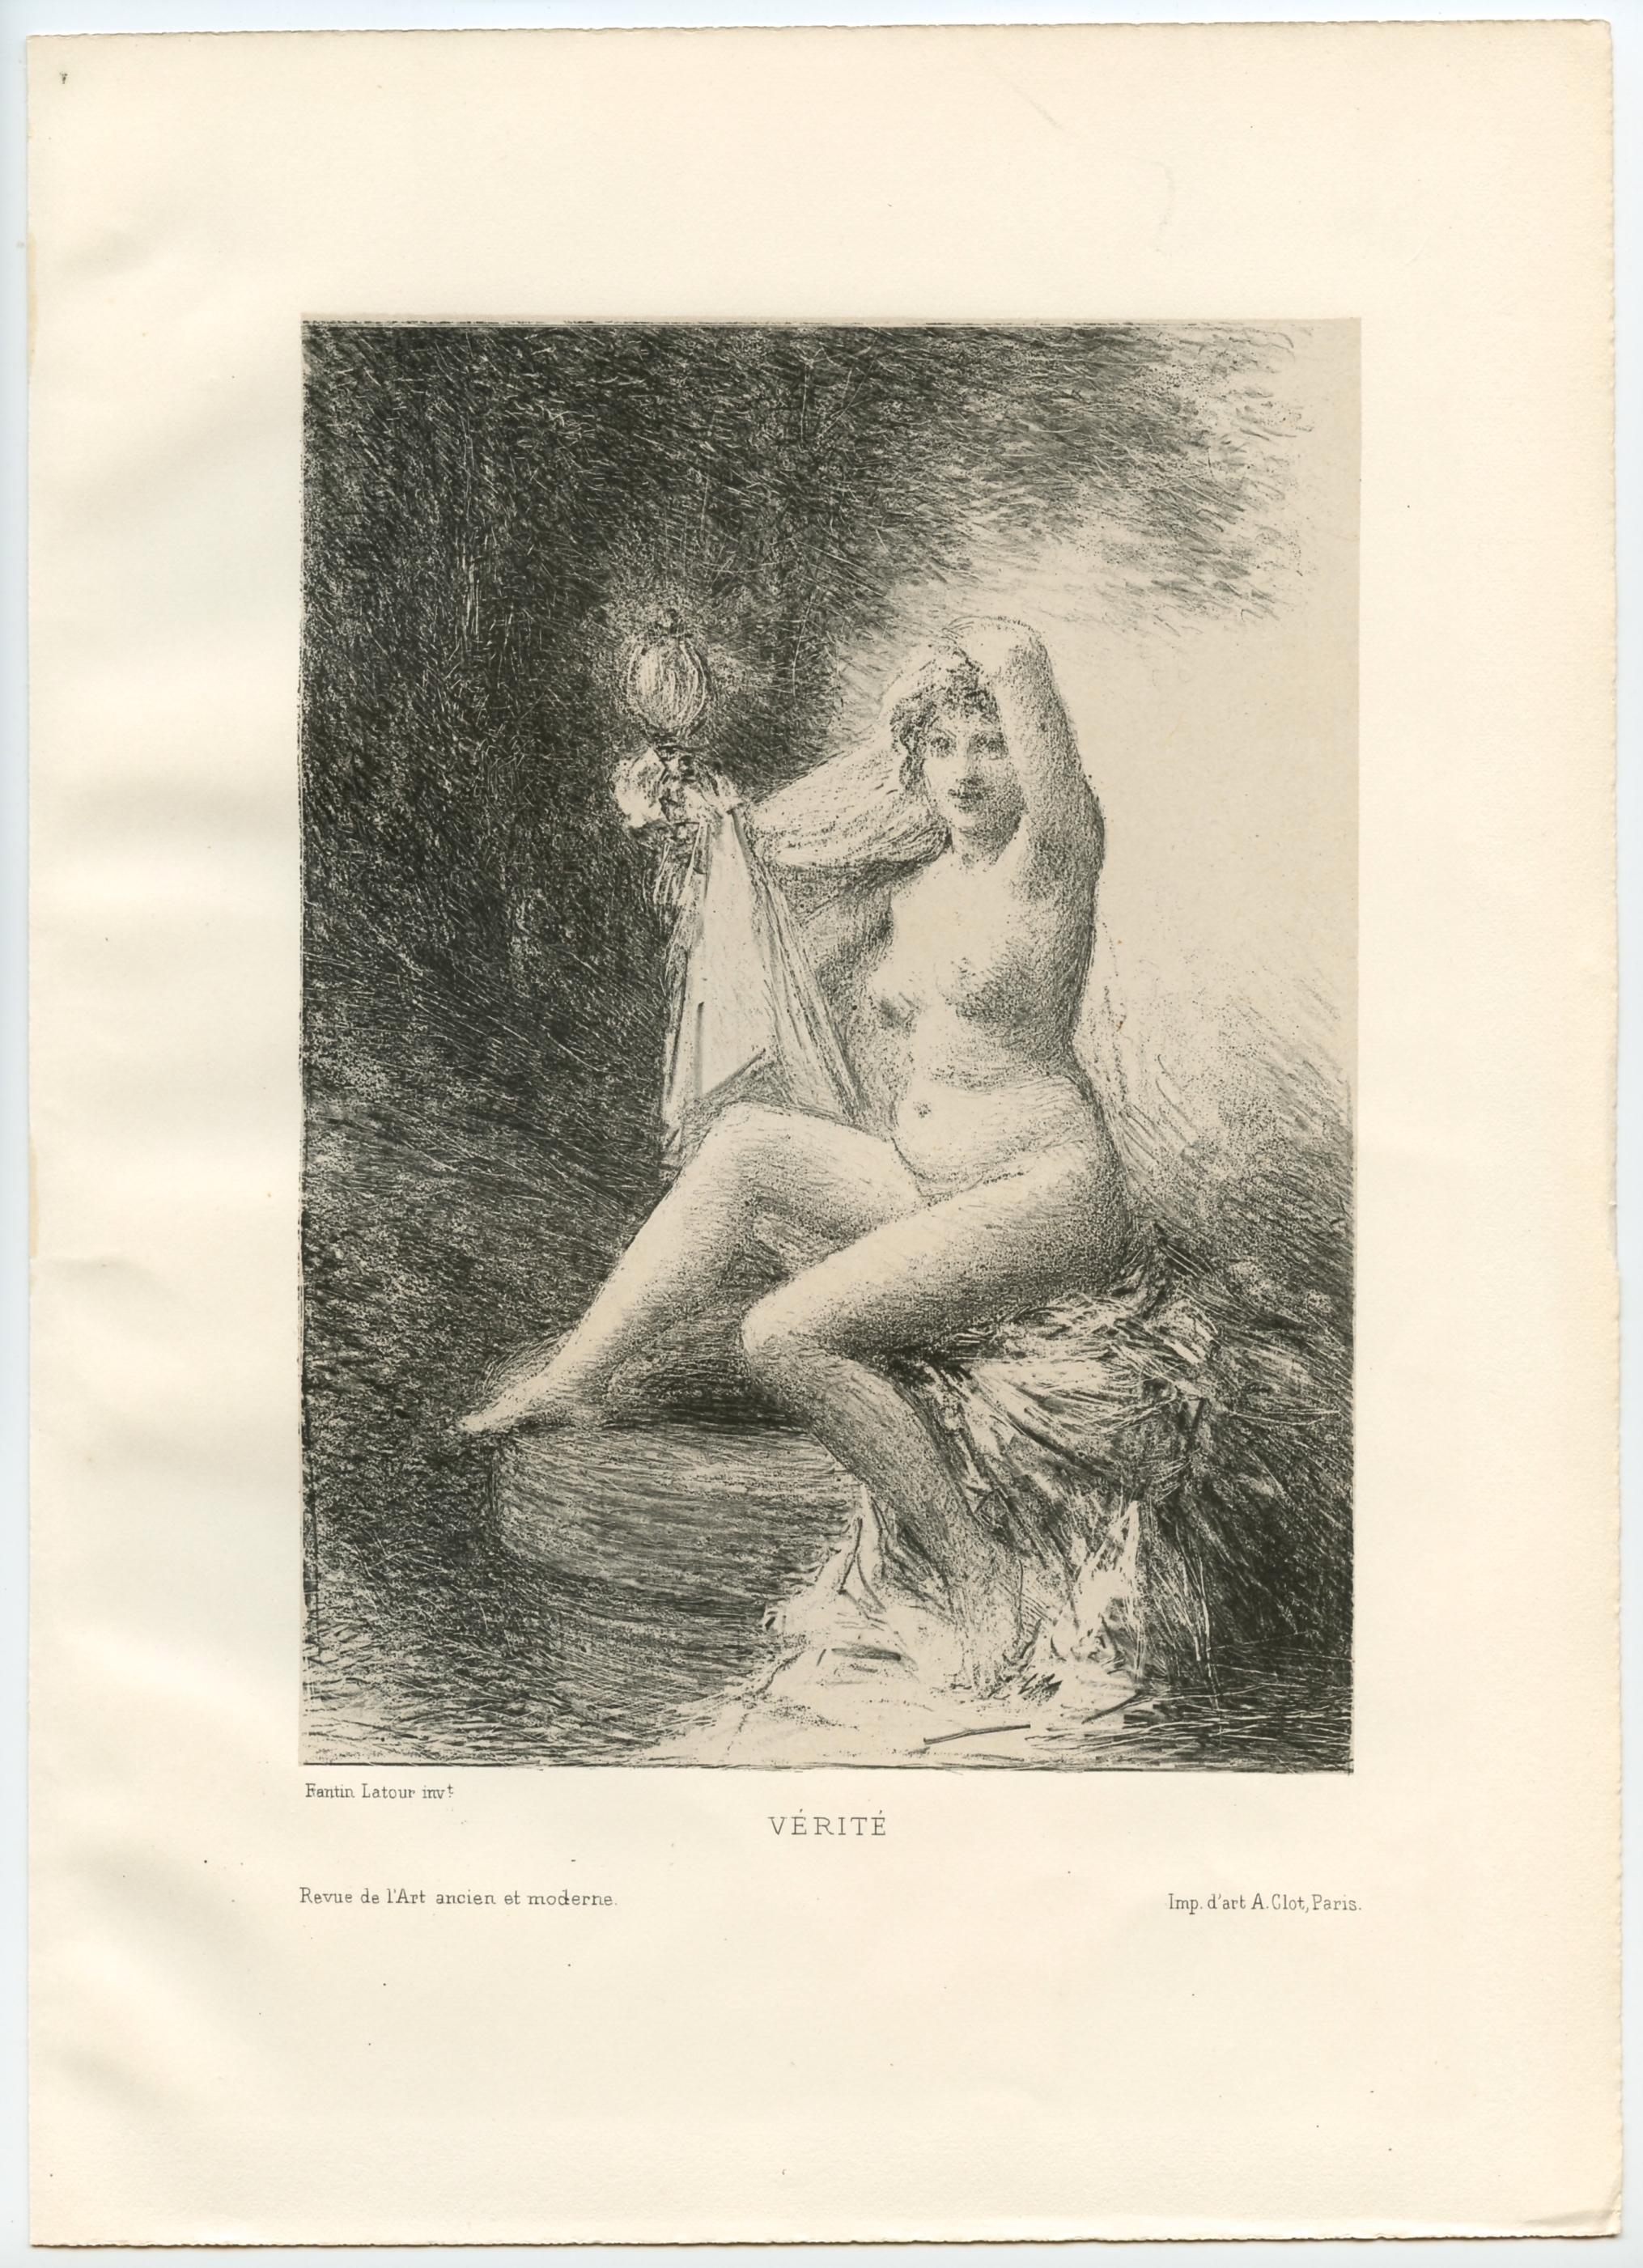 Henri Fantin-Latour Nude Print - "Verite" original lithograph